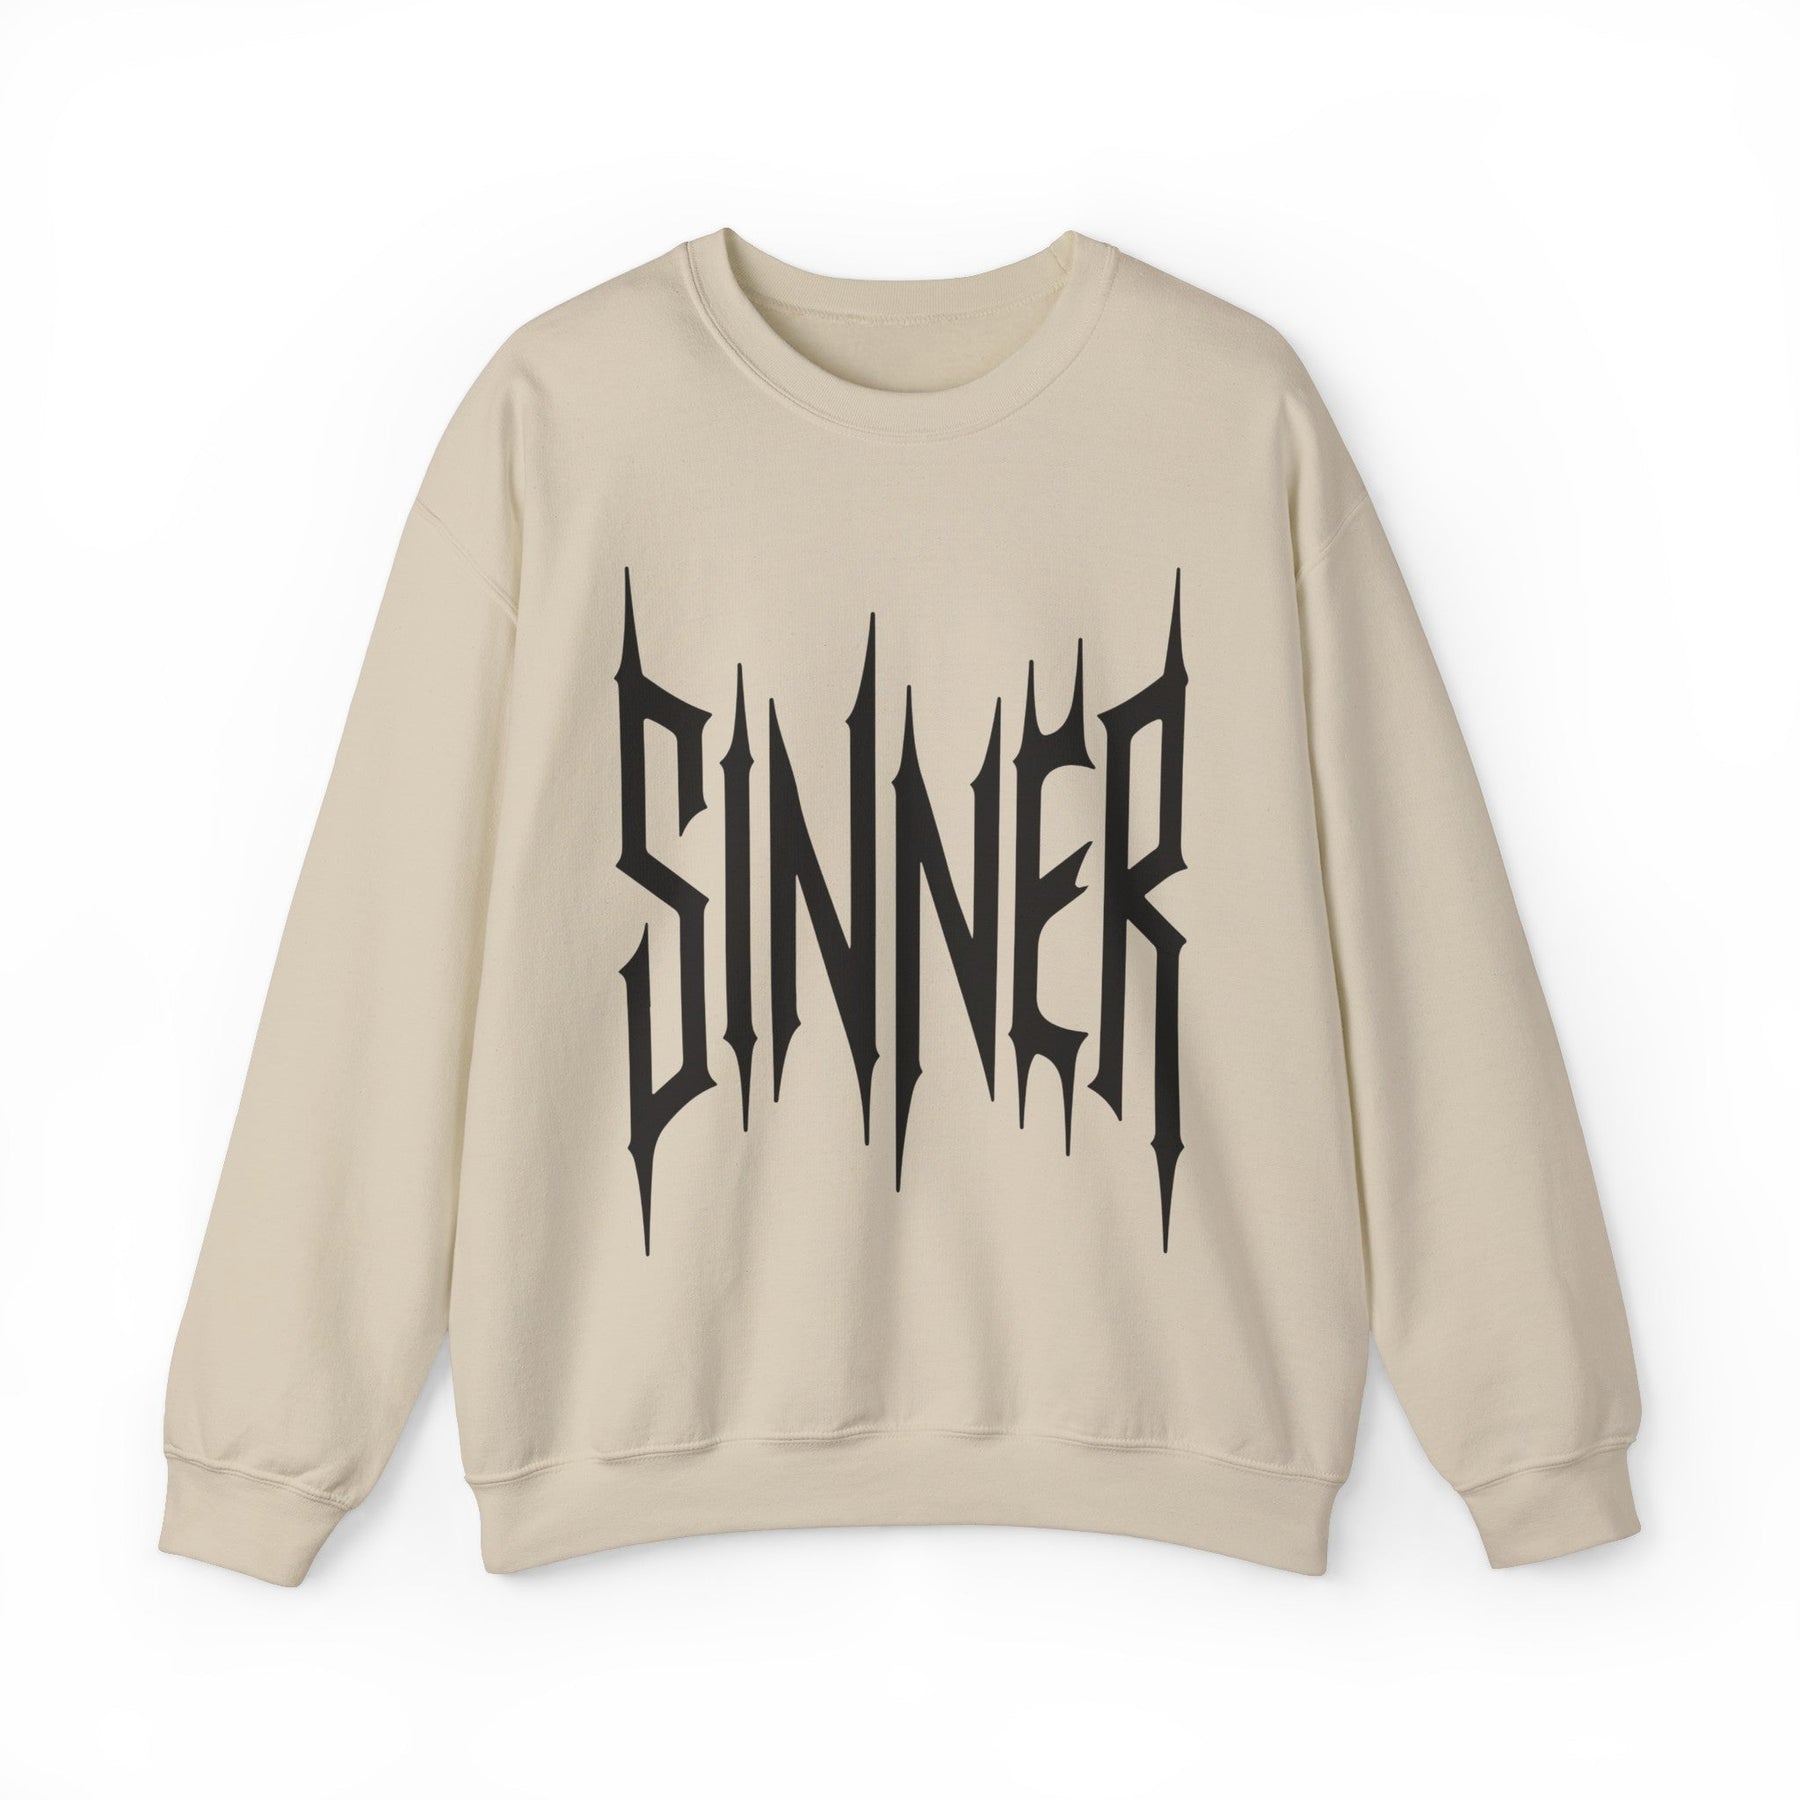 Sinner Unisex Sweatshirt - Goth Cloth Co.Sweatshirt10314820523159997231